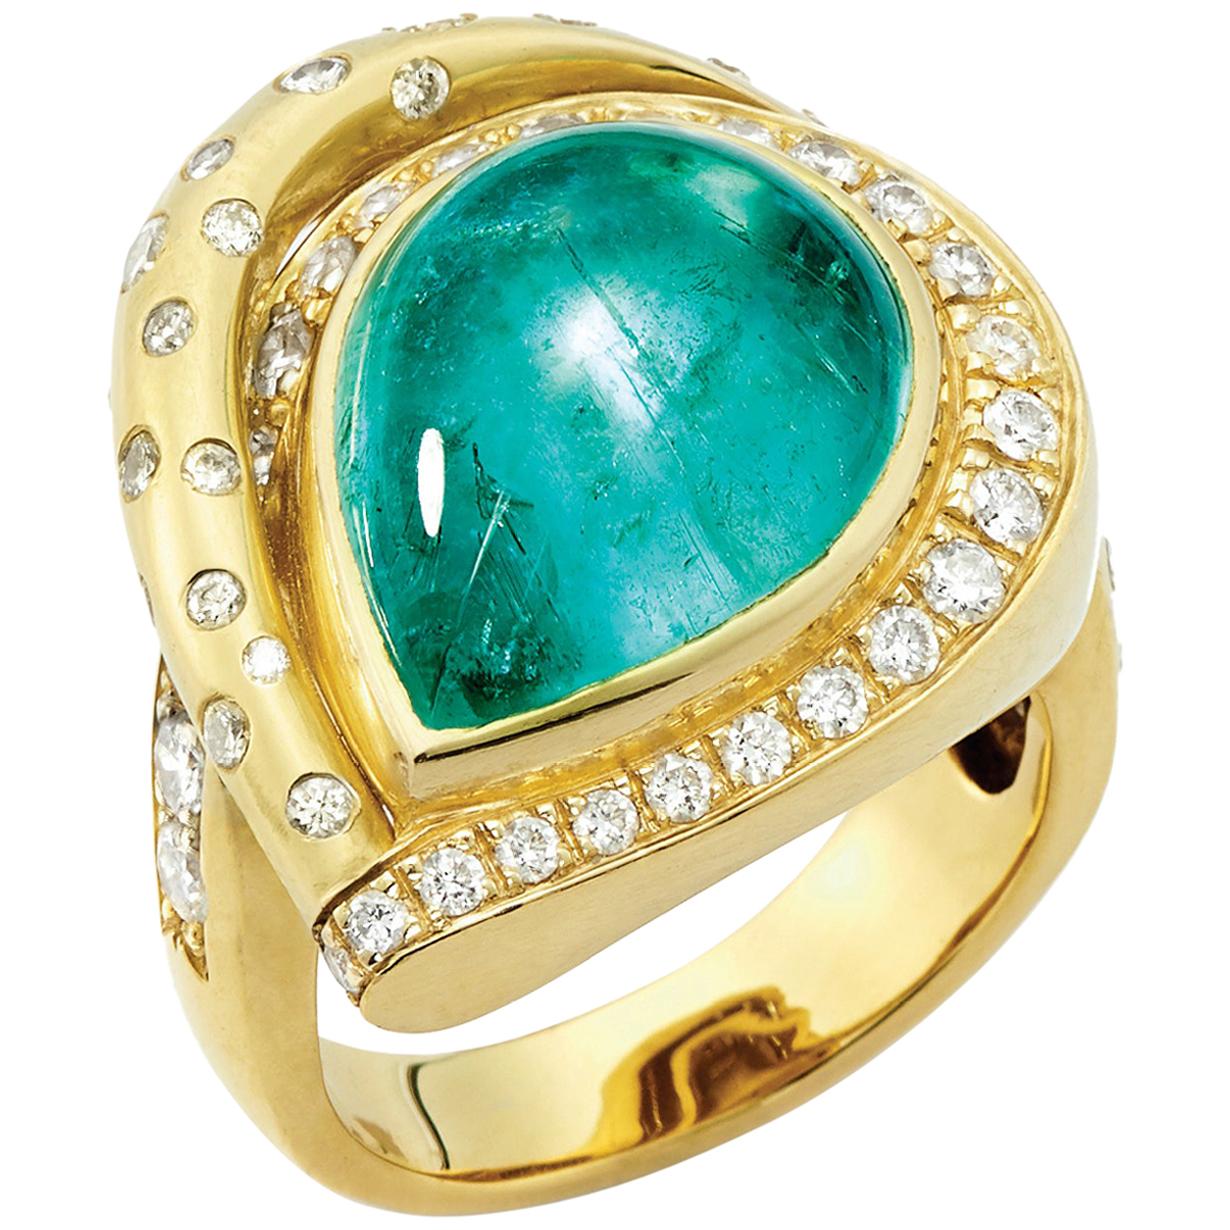 Susan Lister Locke 12.16ct Paraiba Tourmaline & Diamond Swirl Ring in 18K Gold For Sale